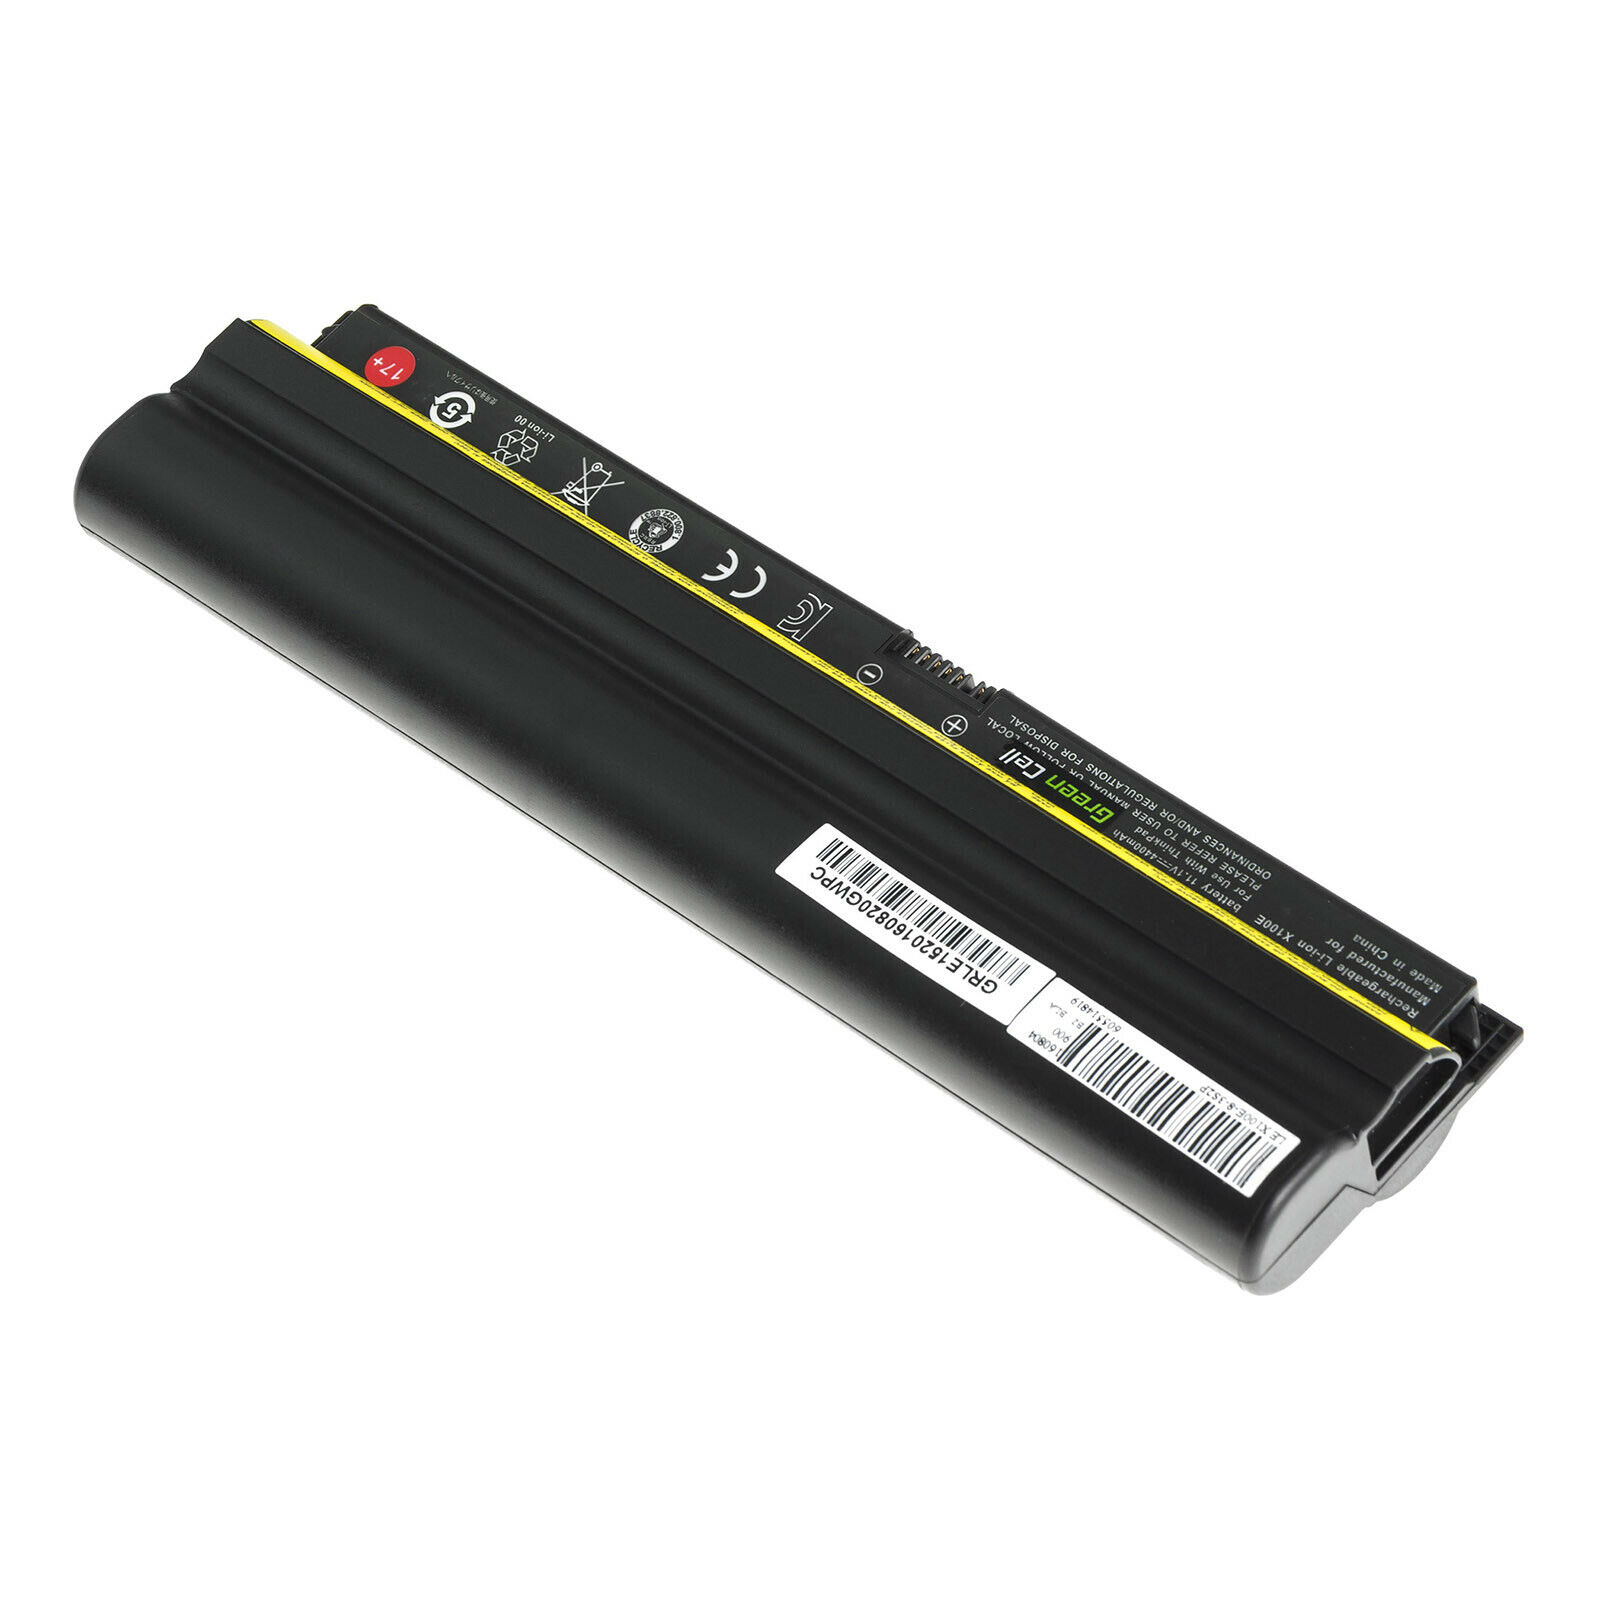 Batteri til Lenovo ThinkPad X100e Edge 11 inch E10 42T4785 42T4787 42T4788 (kompatibelt)